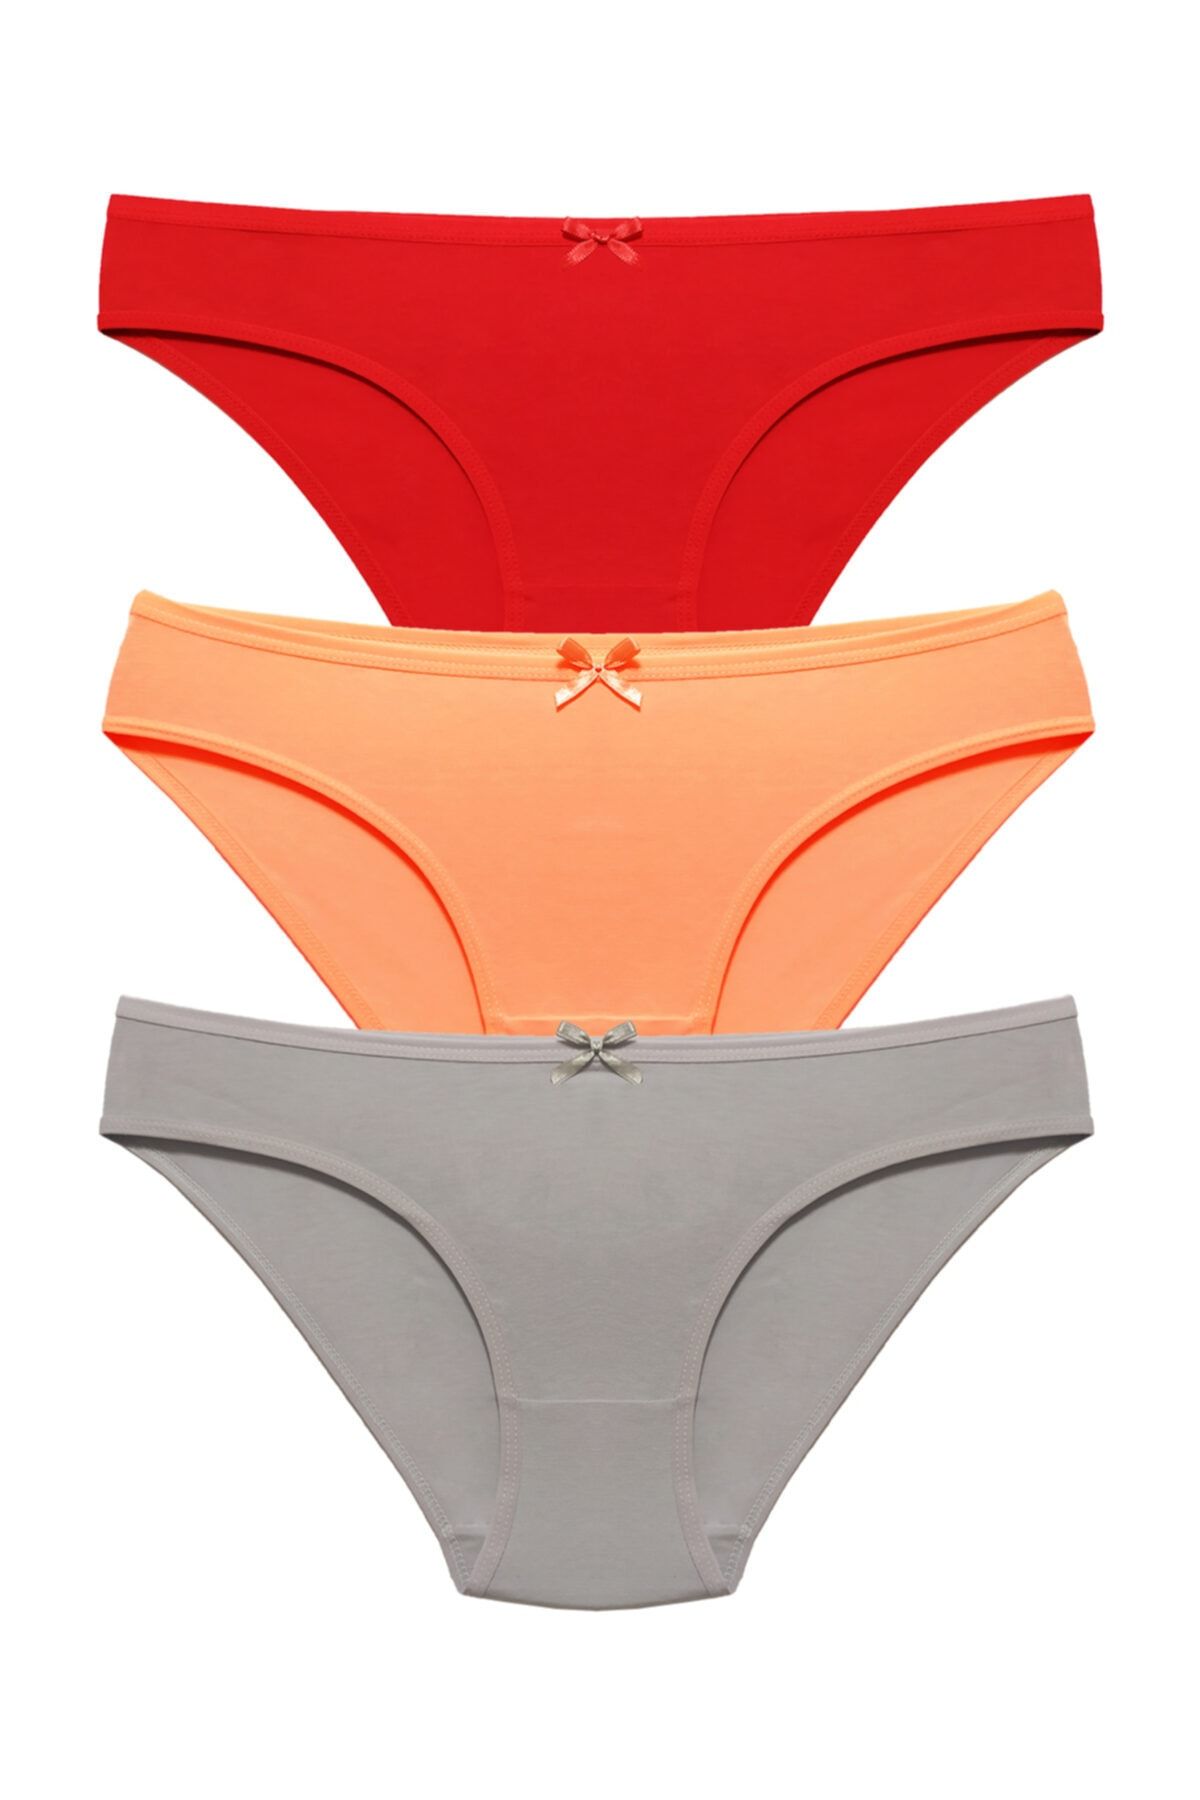 Liona 3 Lü Paket Düz Renk M Beden Bikini Külot